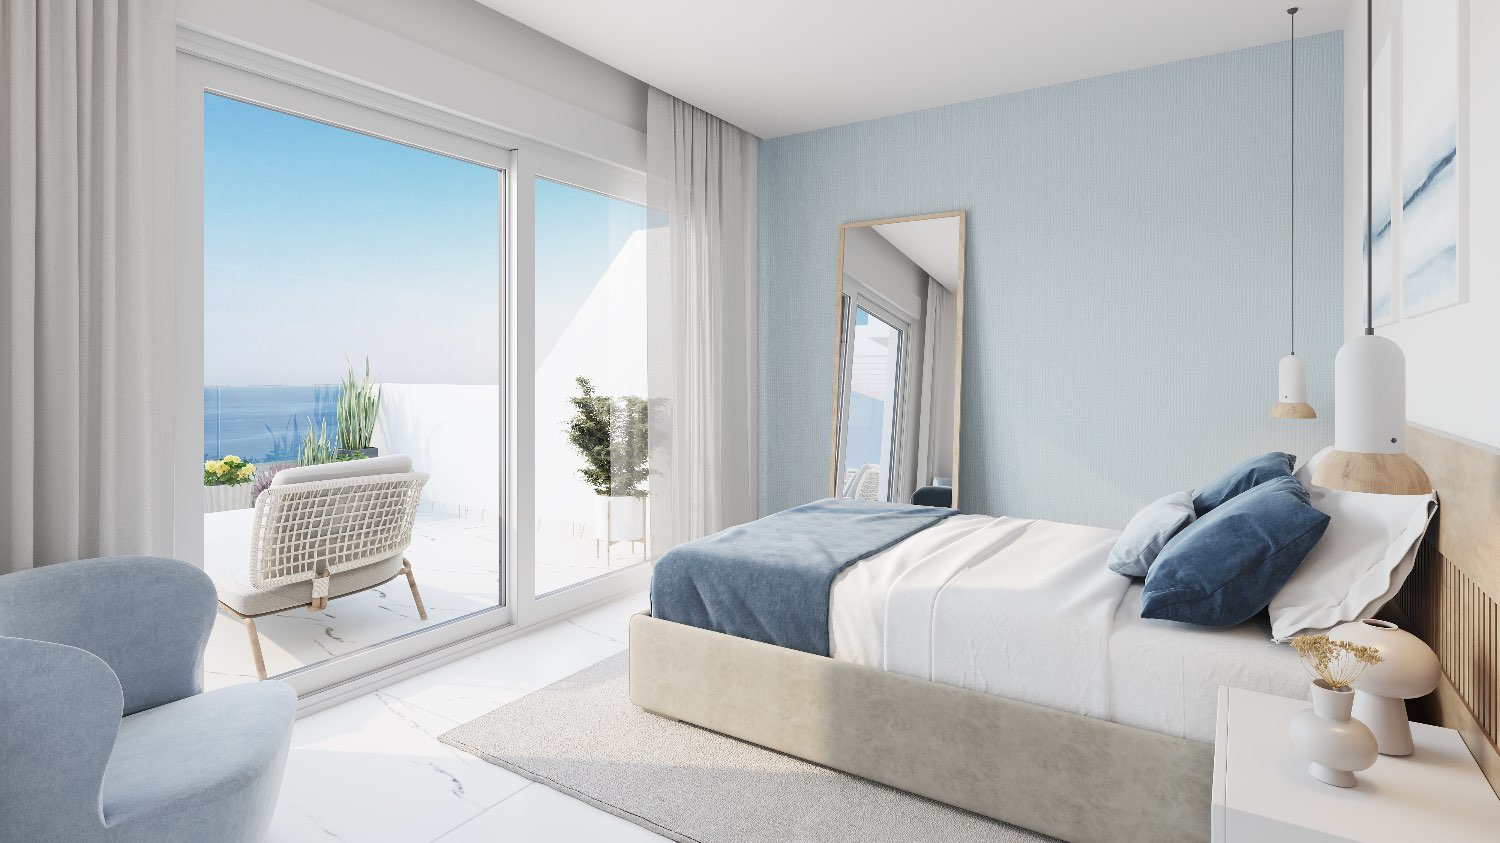 Exclusive two-bedroom apartment in a development in Casares - Costa del Sol